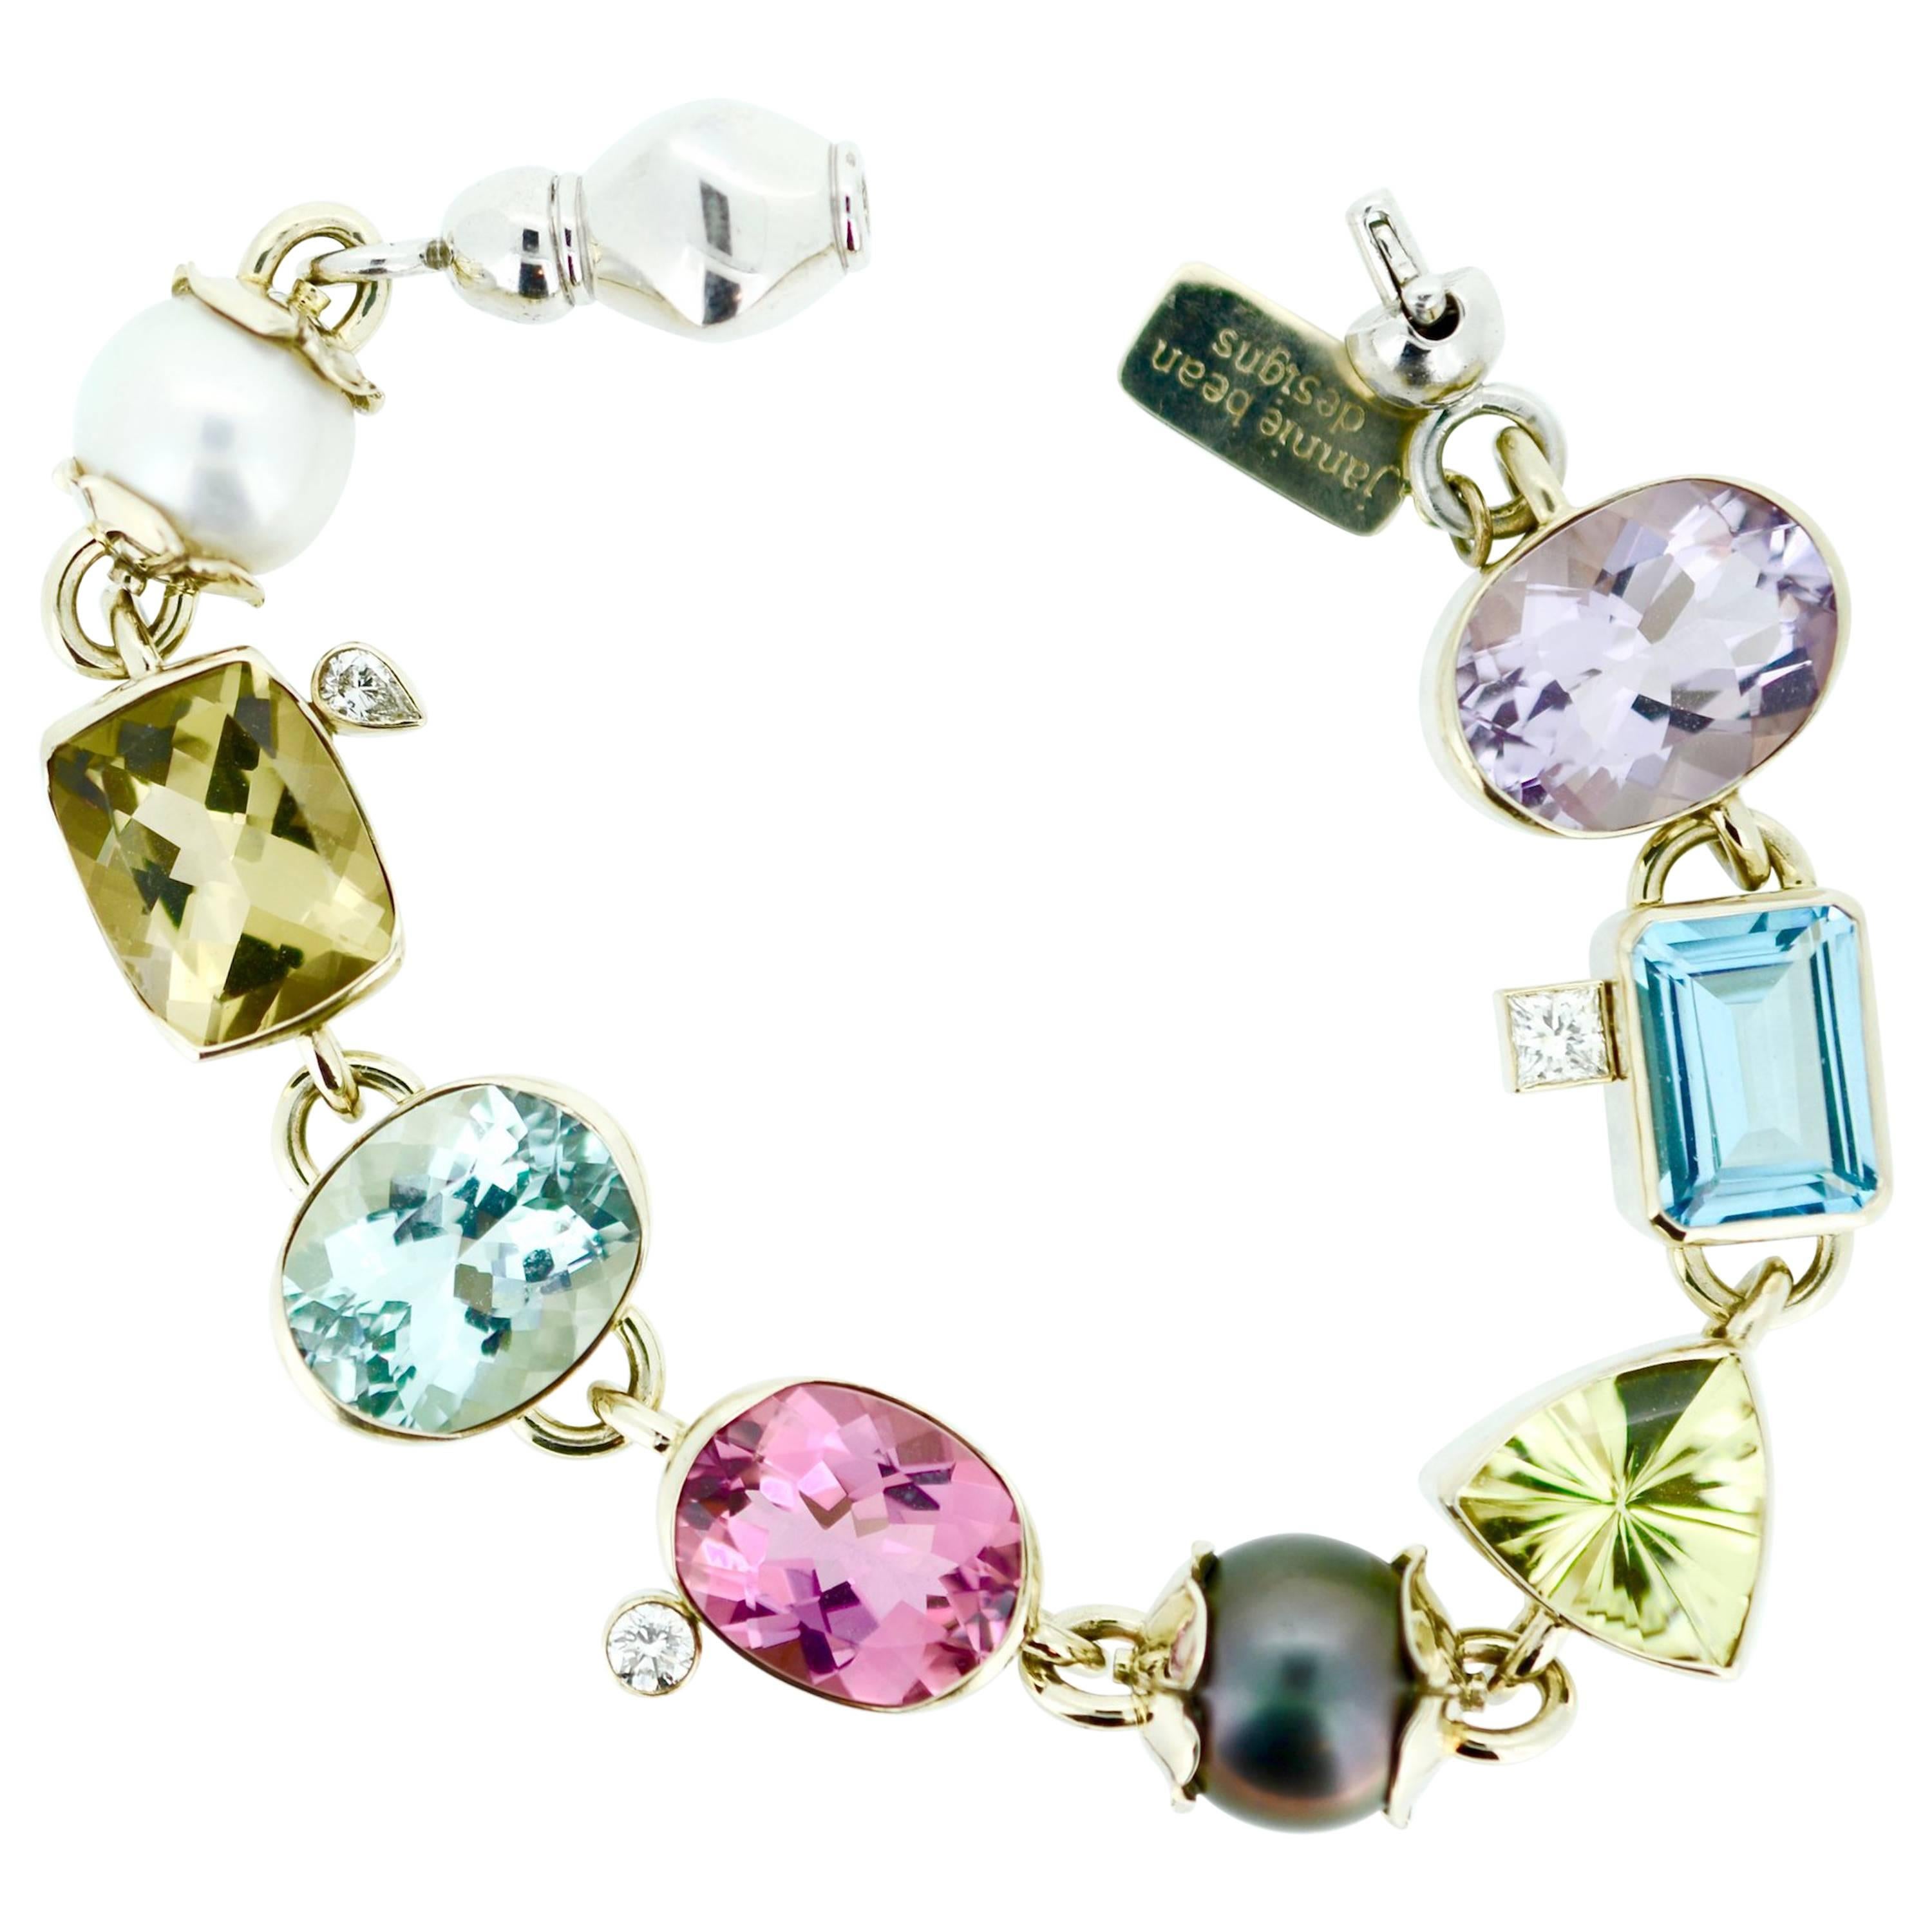 Magnificent "Key West Coconut" Gemstone Bracelet For Sale